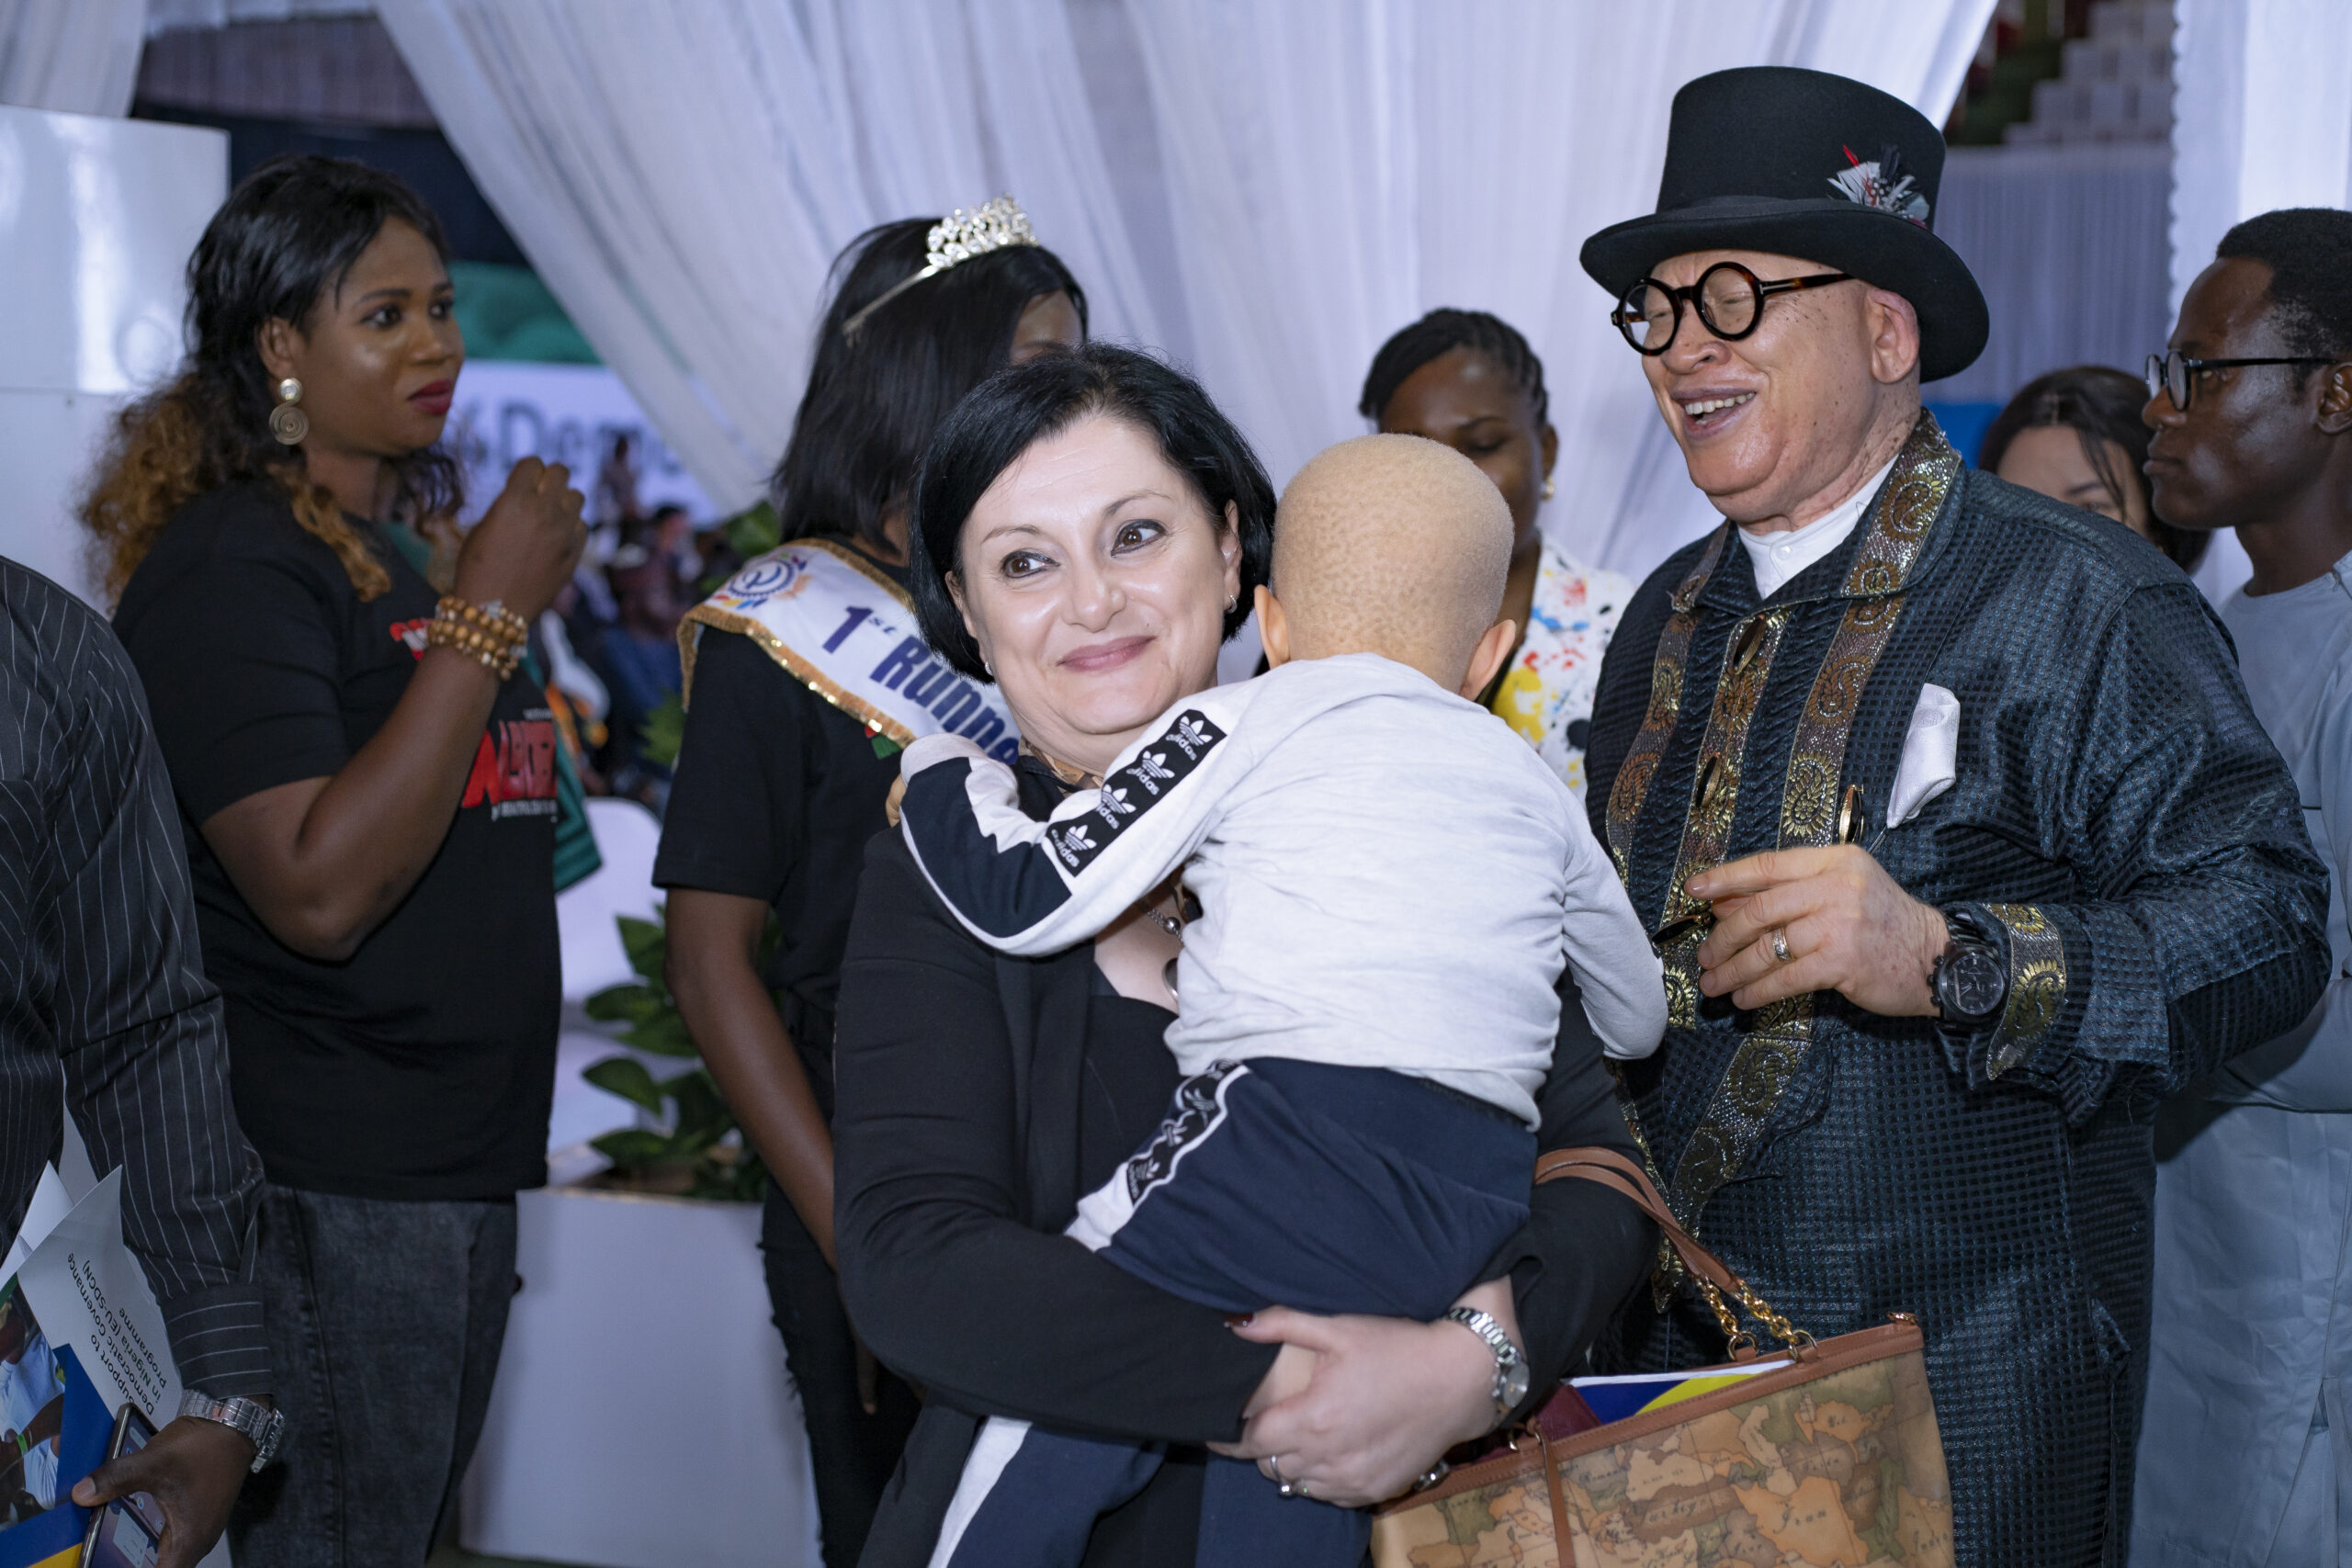 The passionate EU Ambassador hugging a child at the event